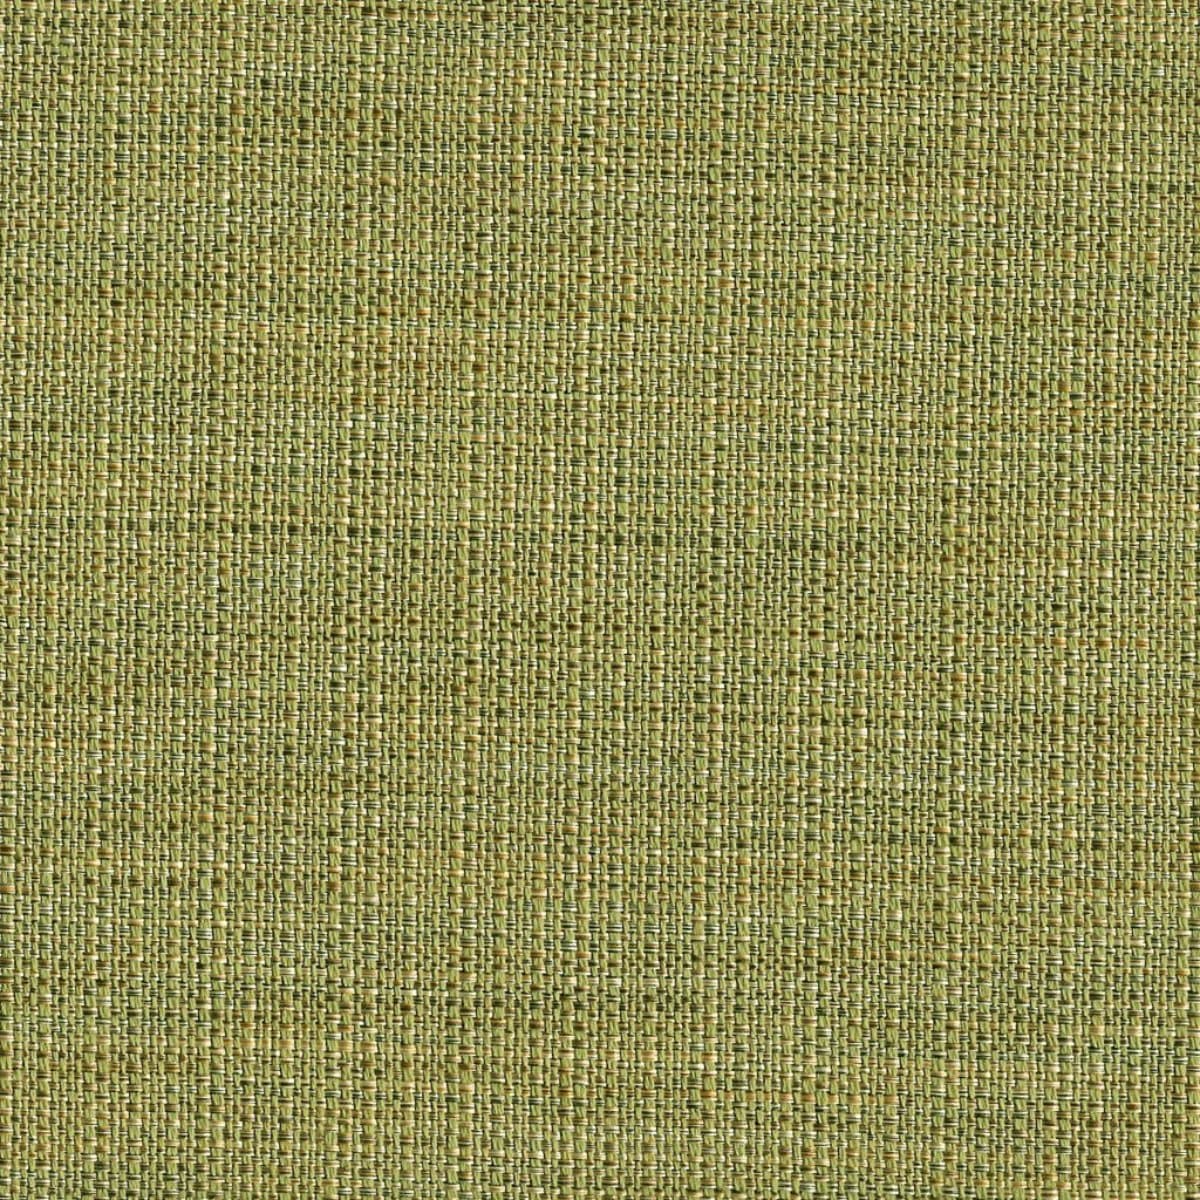 Handsome Green Tweed Swatch | Barnett Home Decor